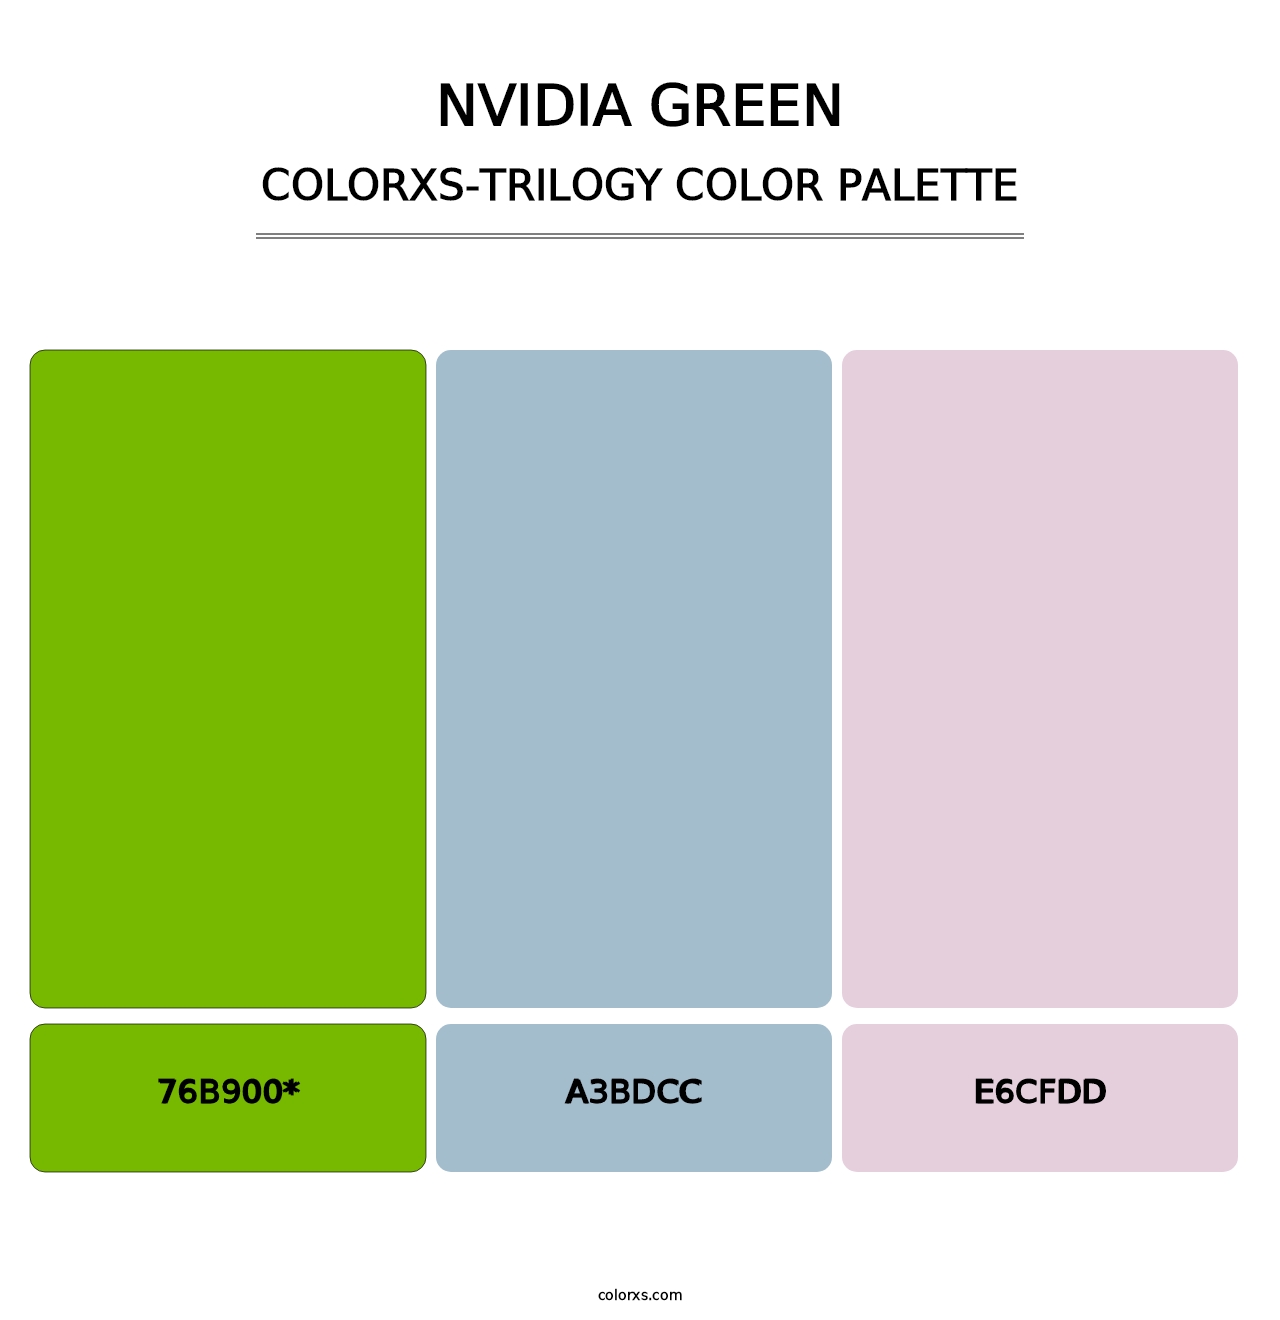 Nvidia Green - Colorxs Trilogy Palette